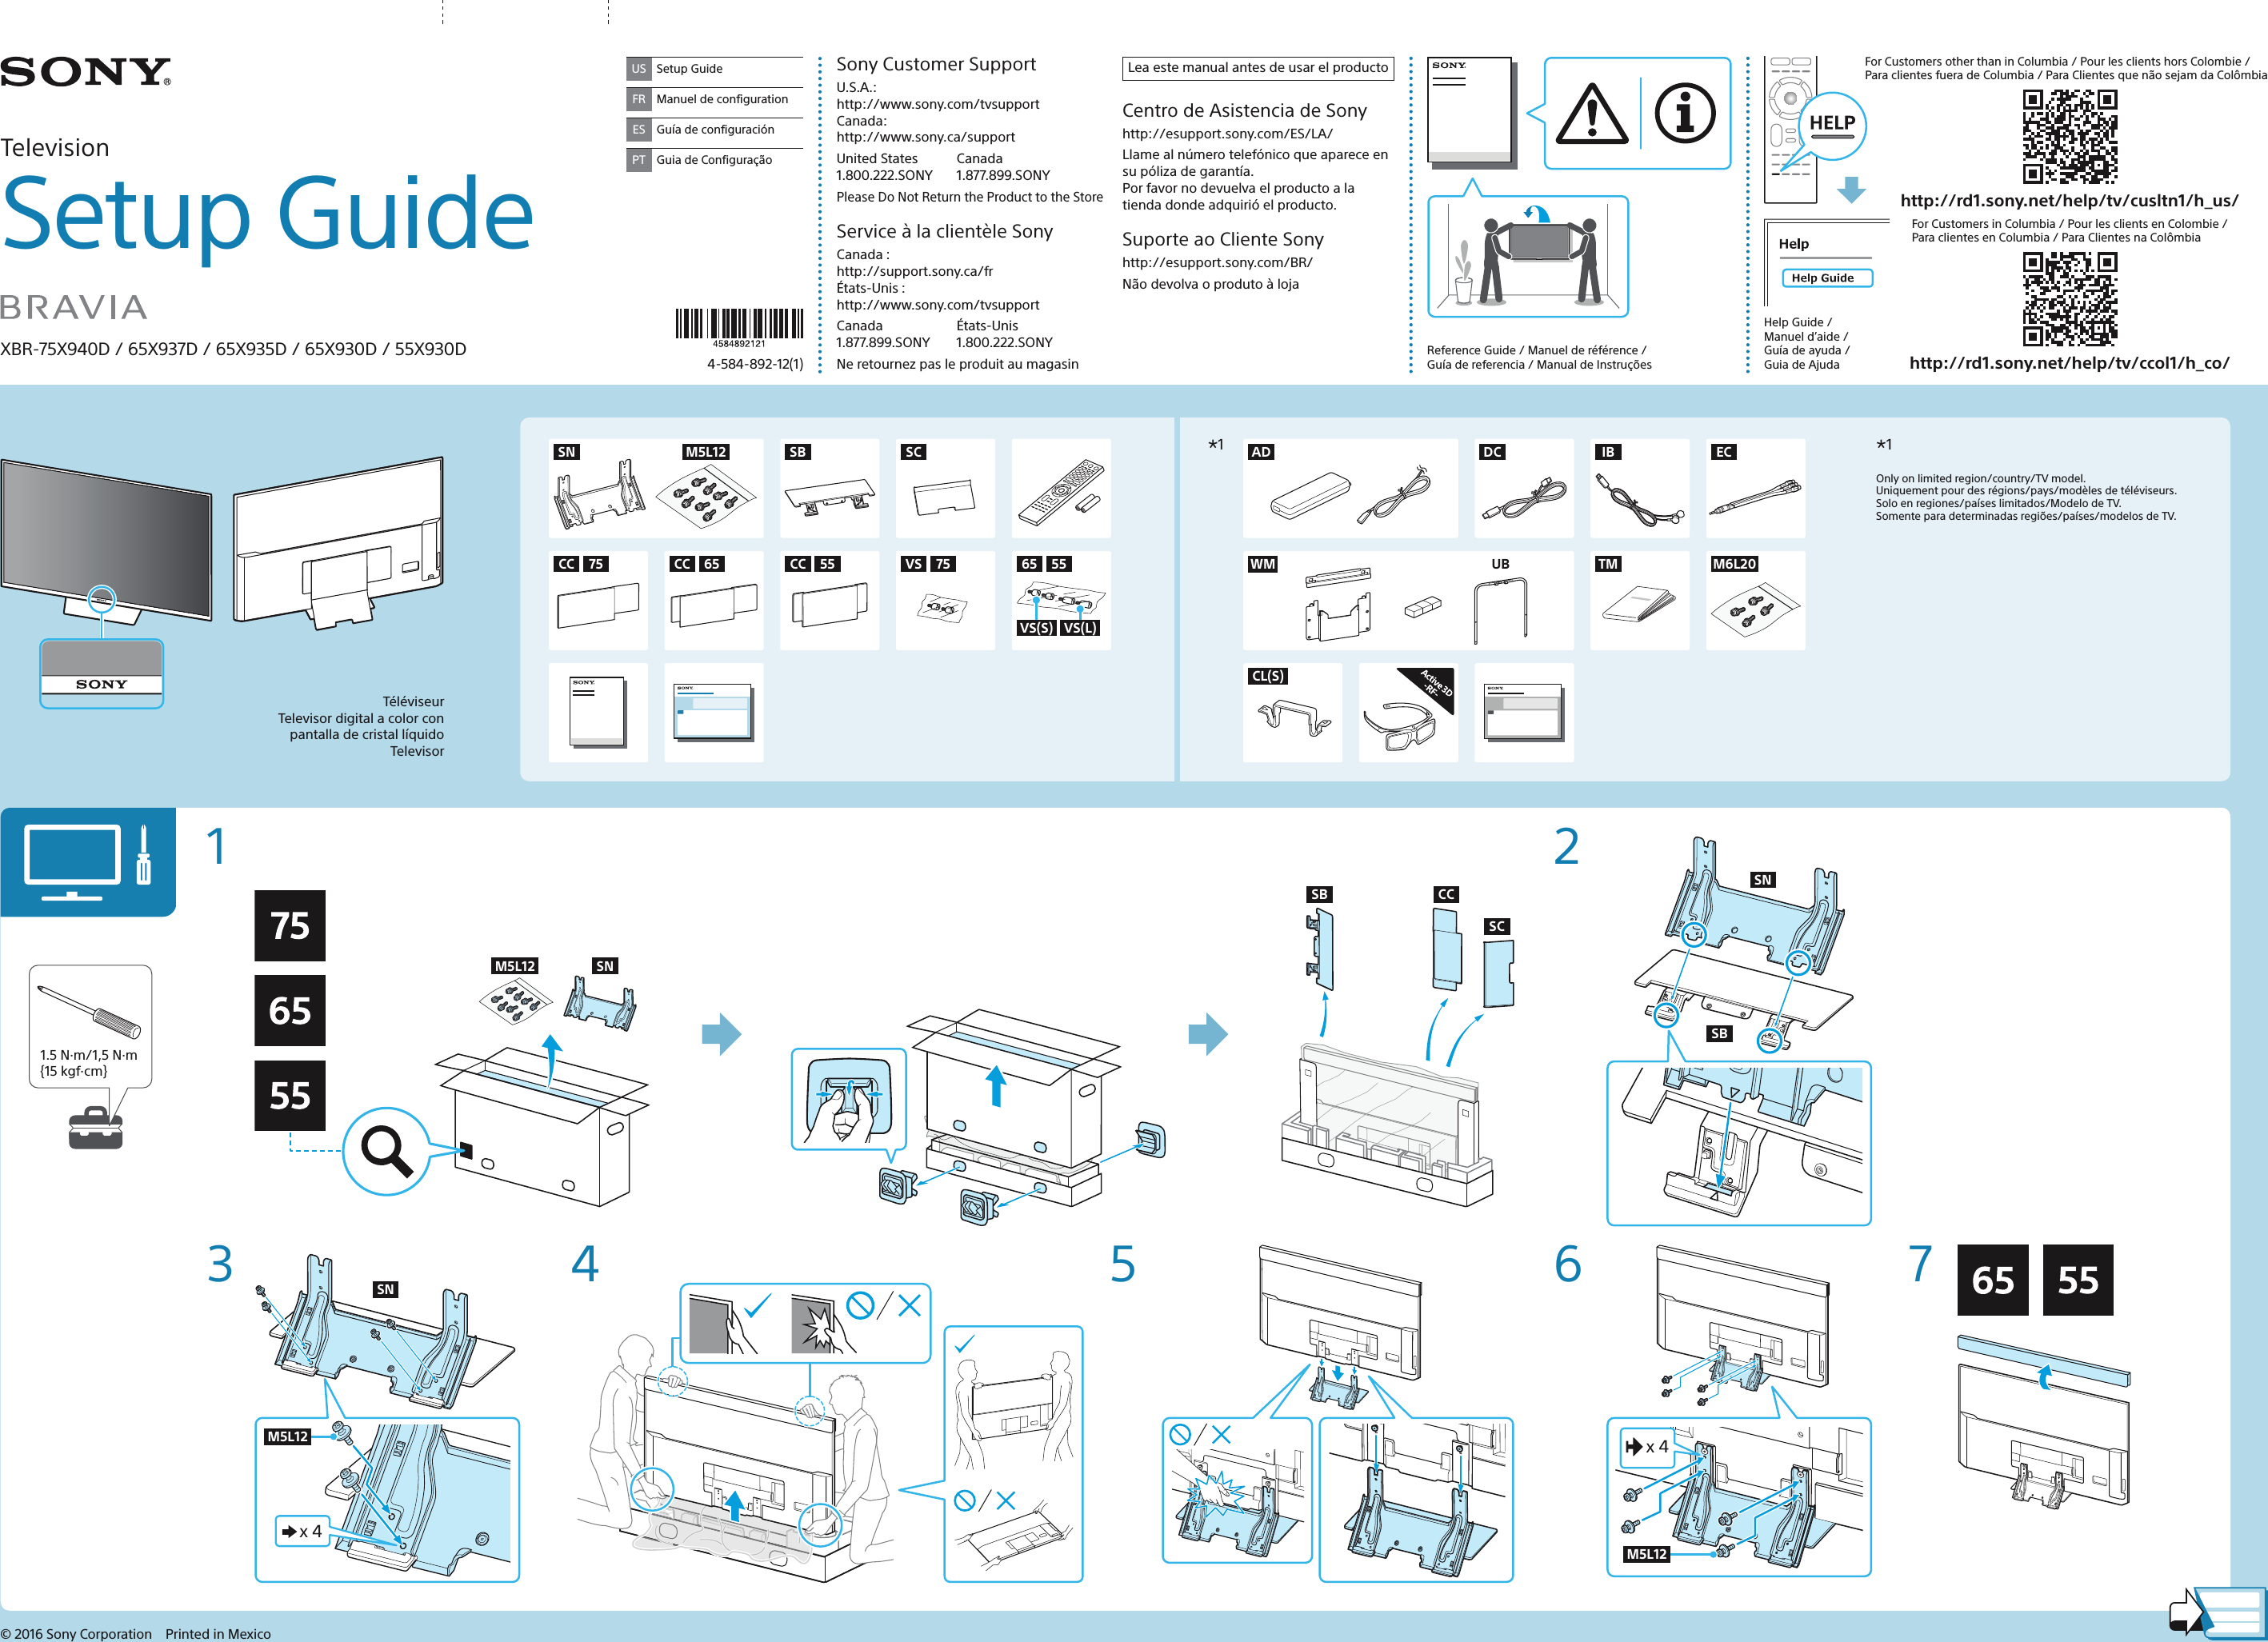 Page 1 of 2 - Sony XBR-55X930D XBR-75X940D / 65X937D 65X935D 65X930D 55X930D User Manual Setup Guide QSG 4584892121